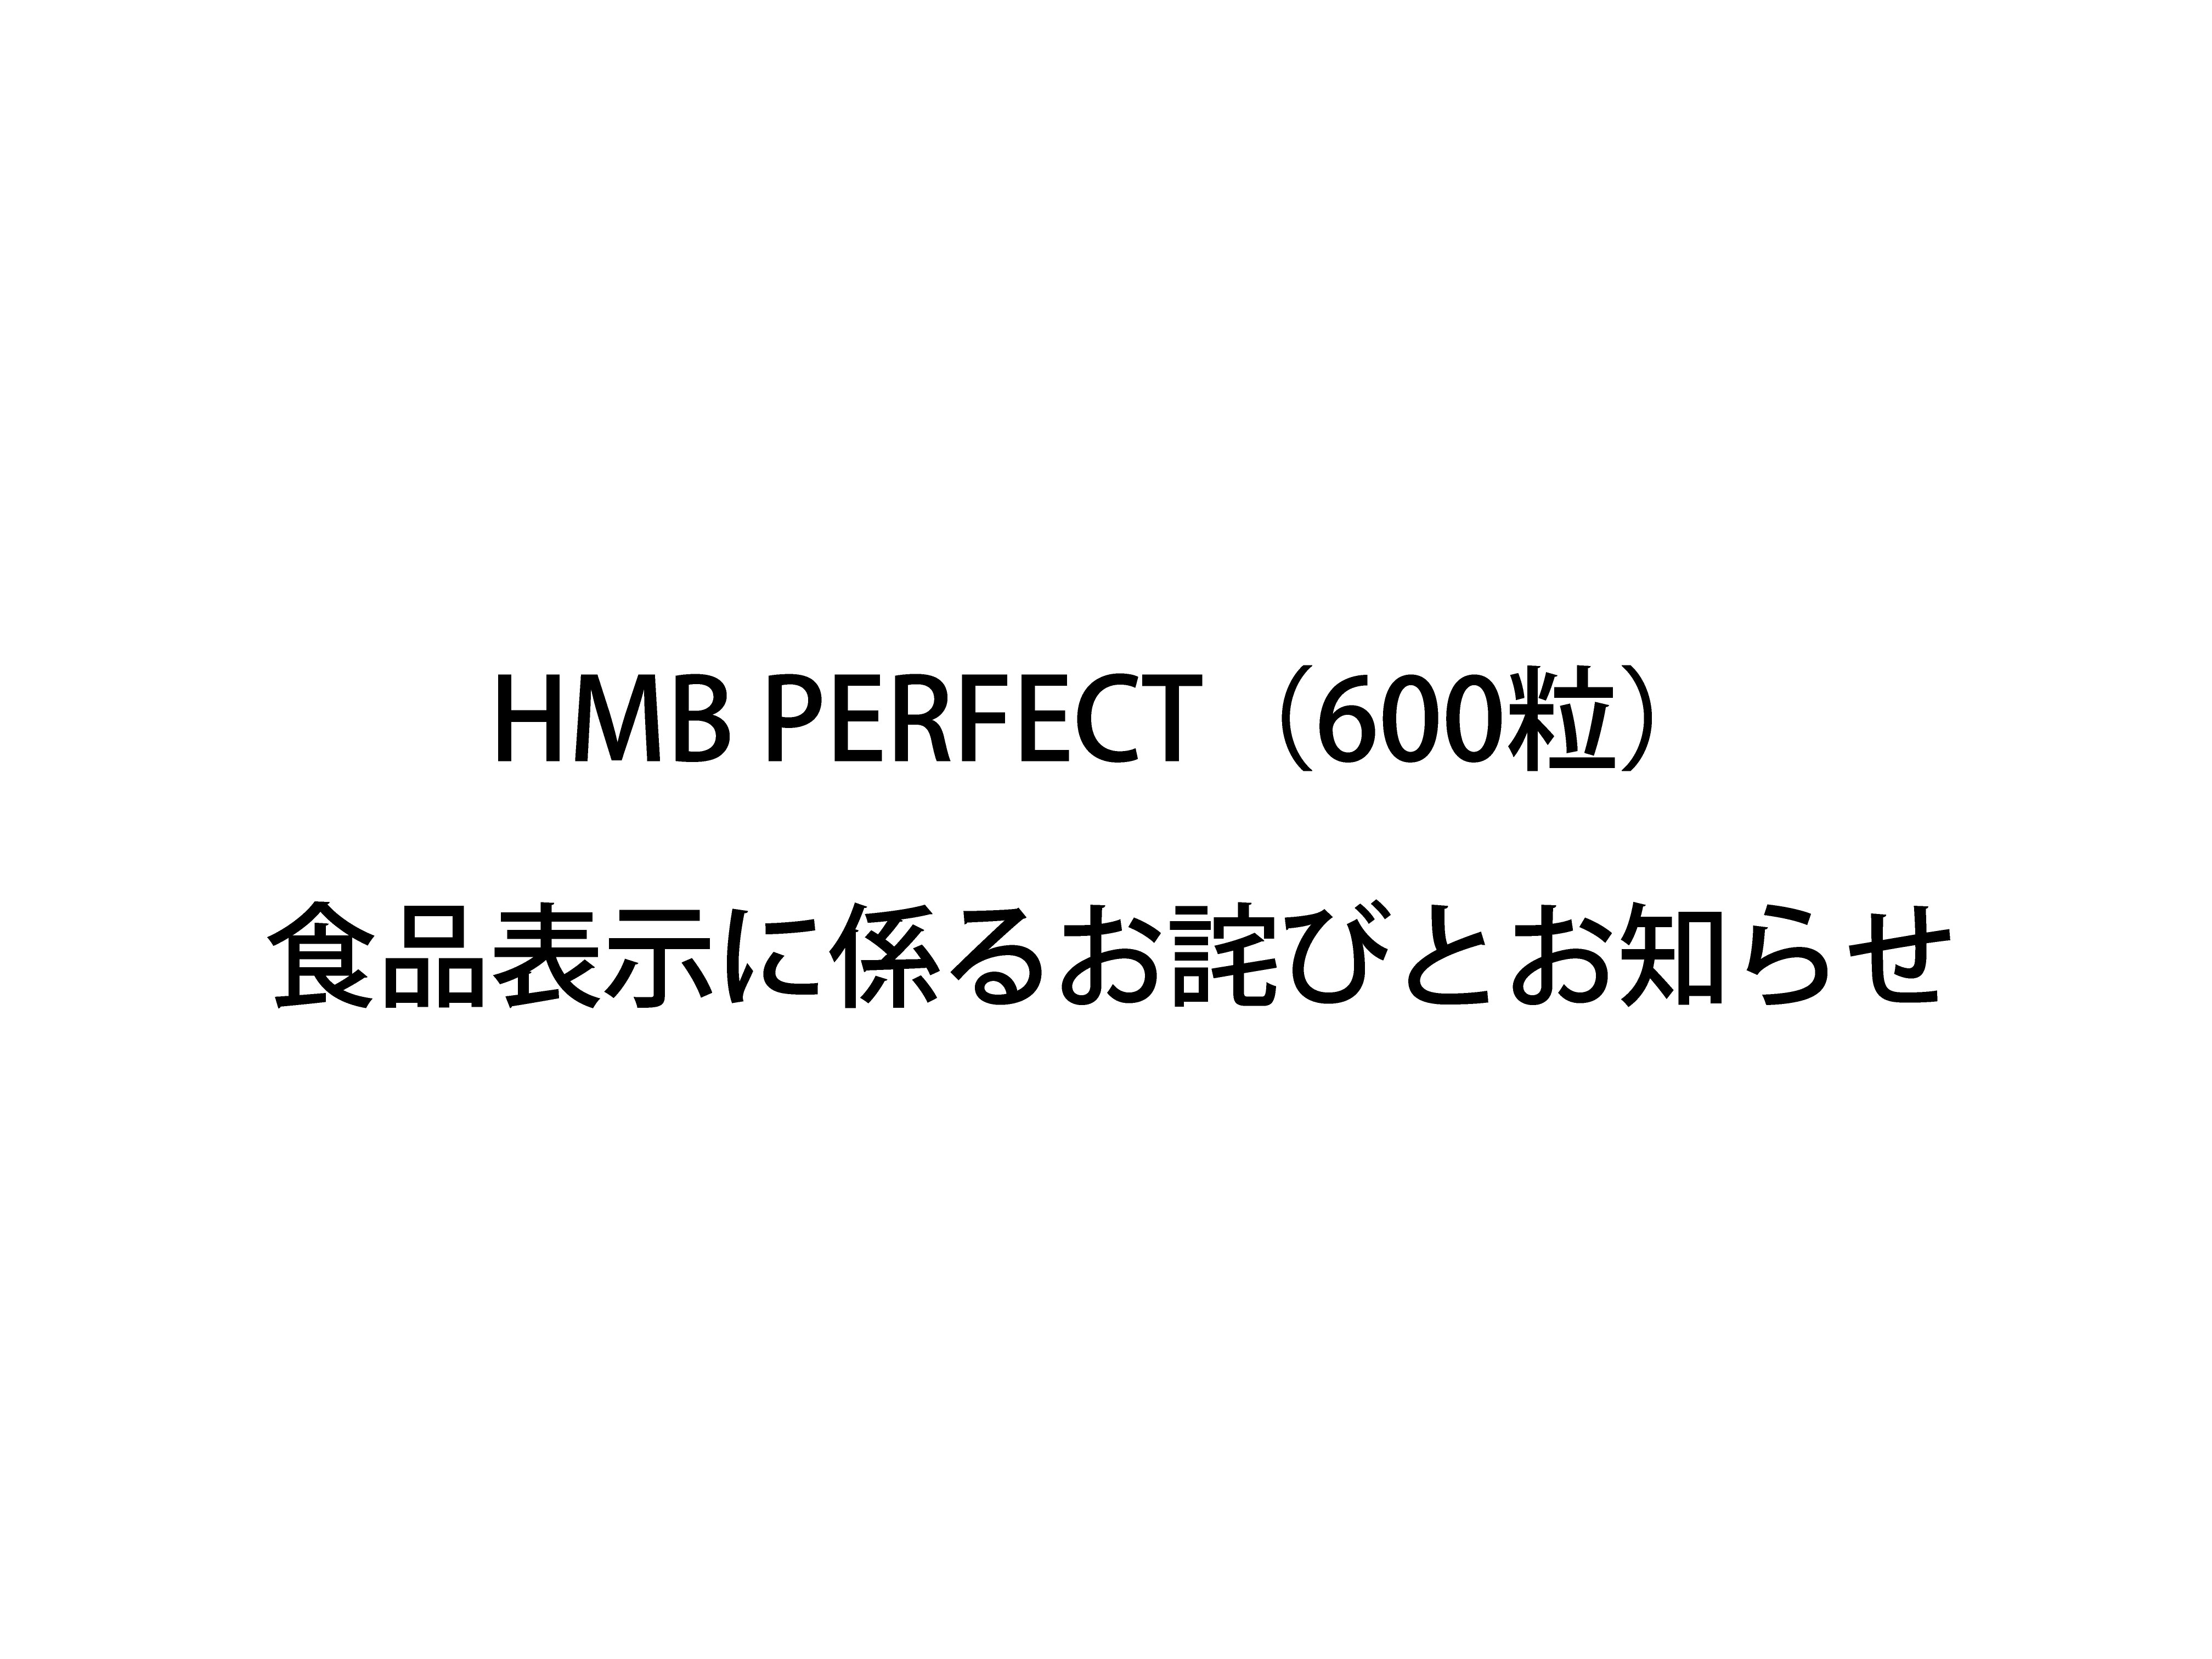 HMB PERFECT（600粒）食品表示に係るお詫びとお知らせ